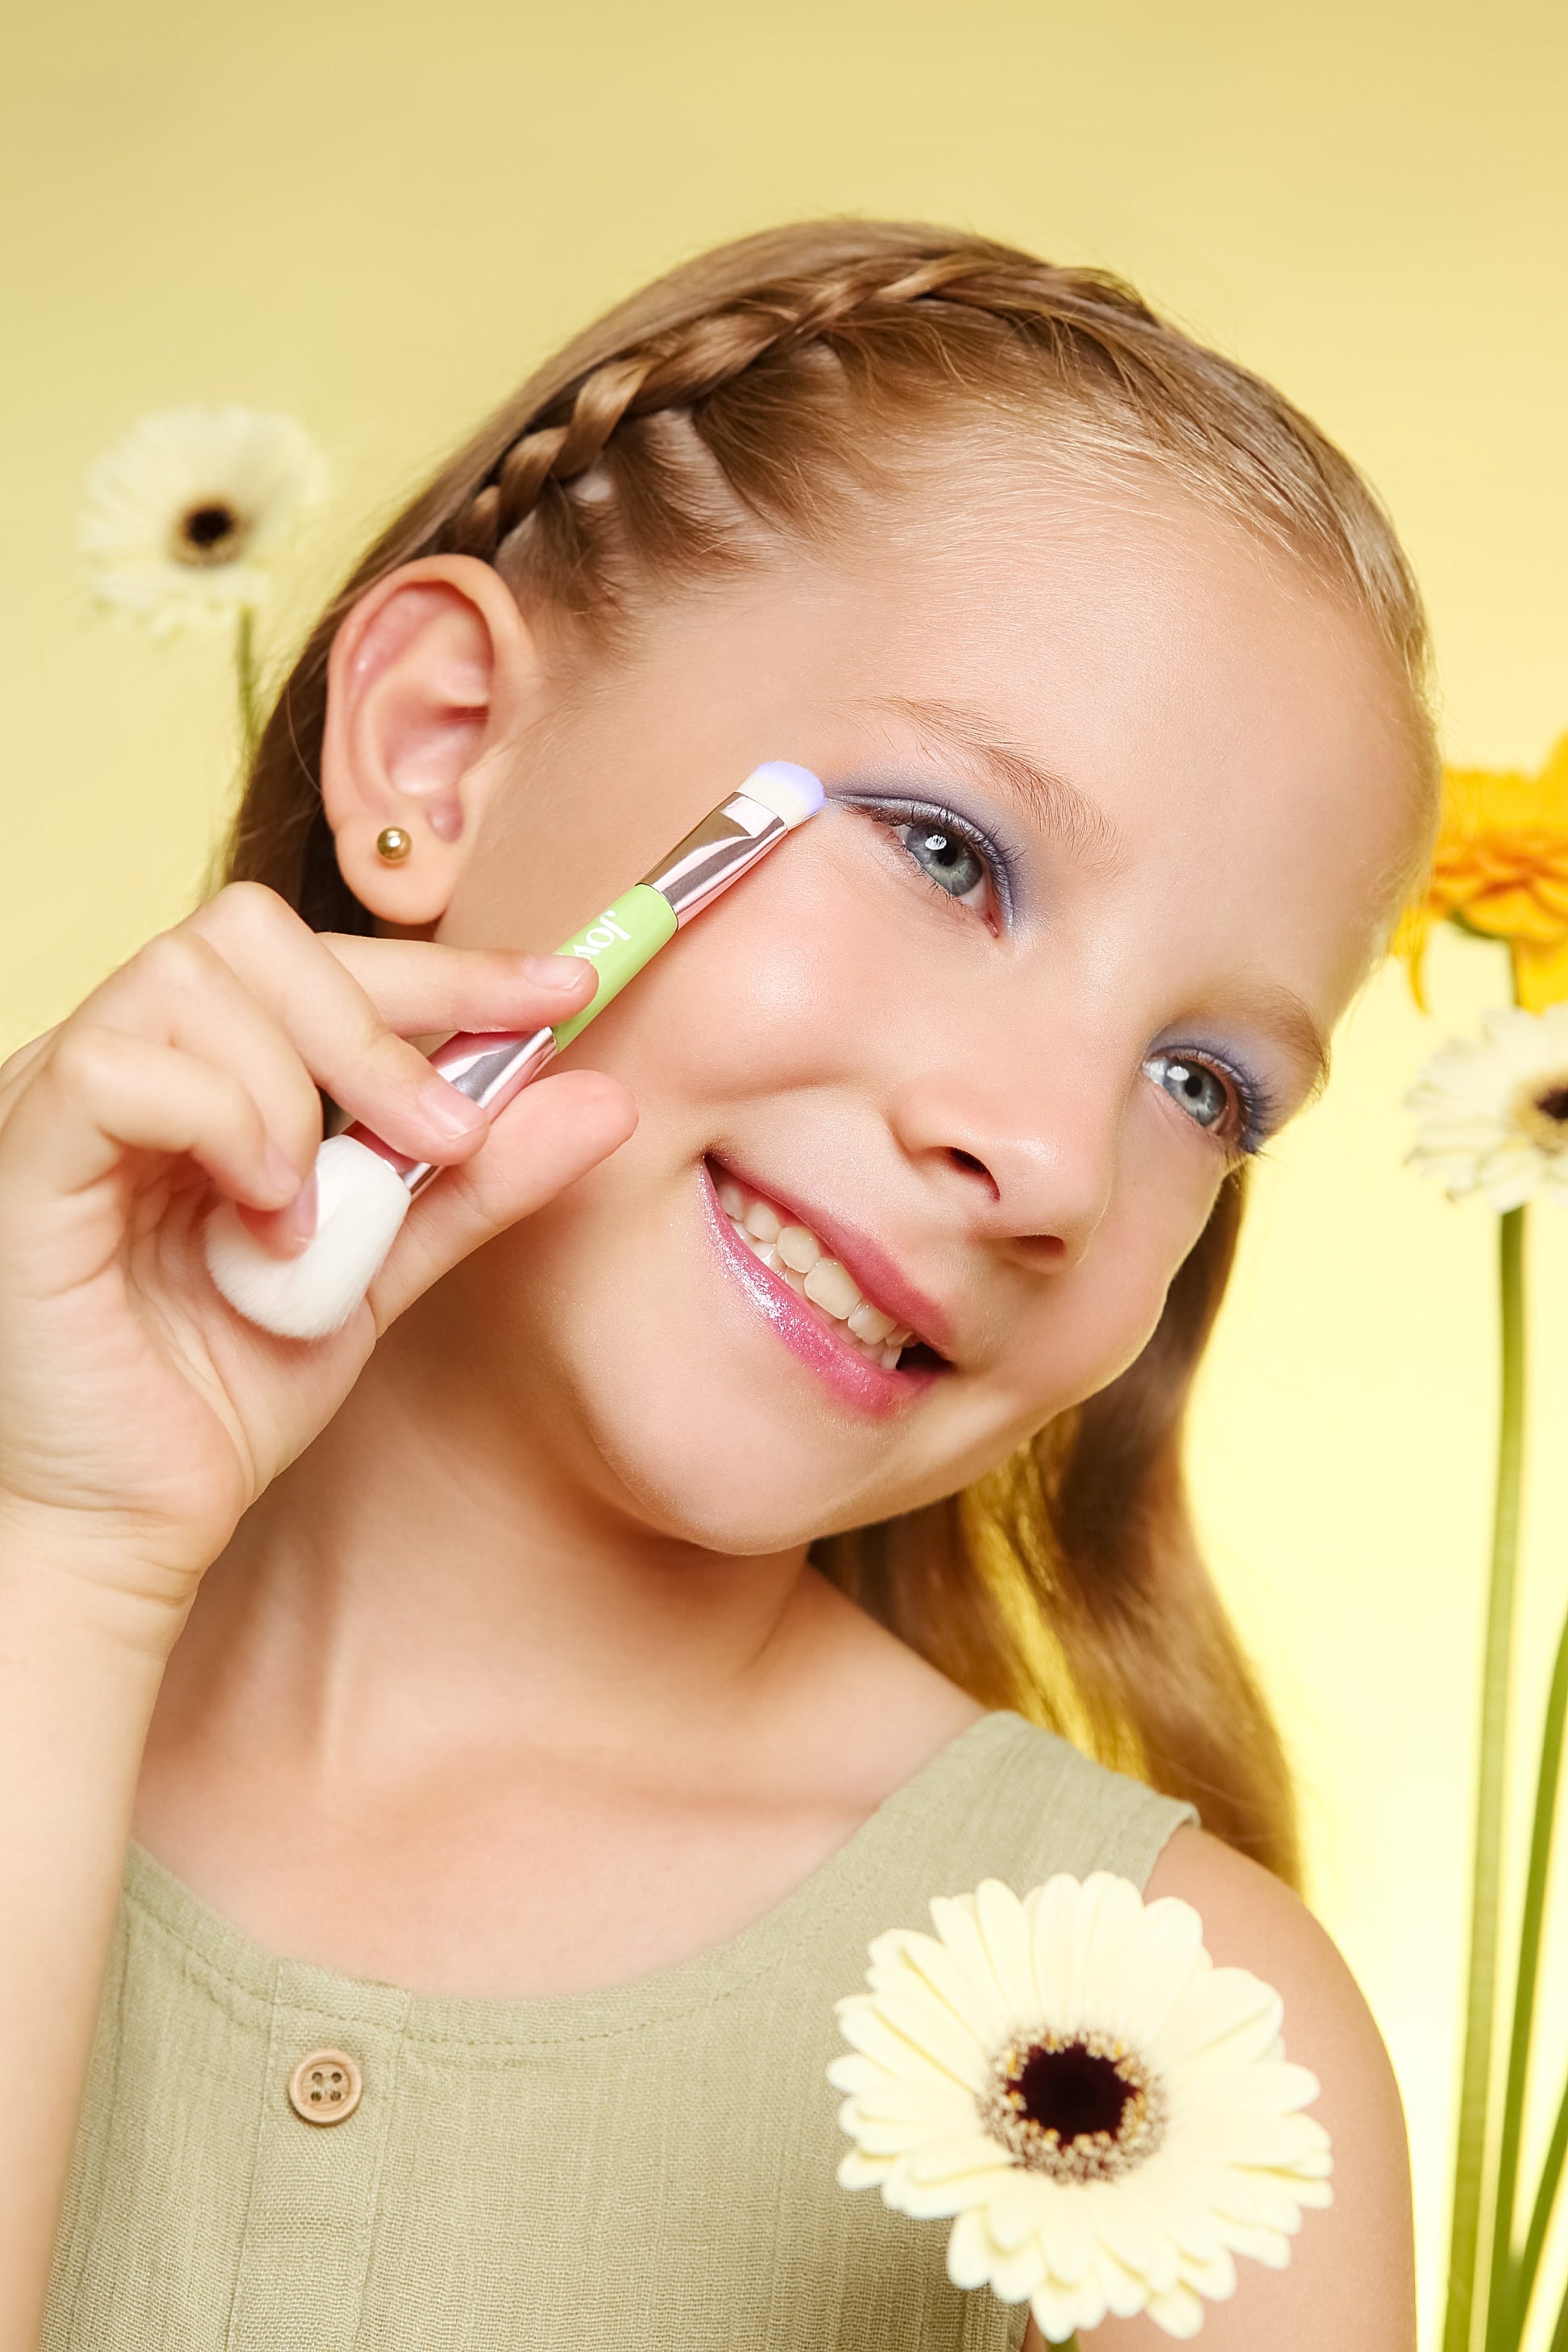 Best Non Toxic Makeup for Kids: Jovy Kid Makeup Set Review 